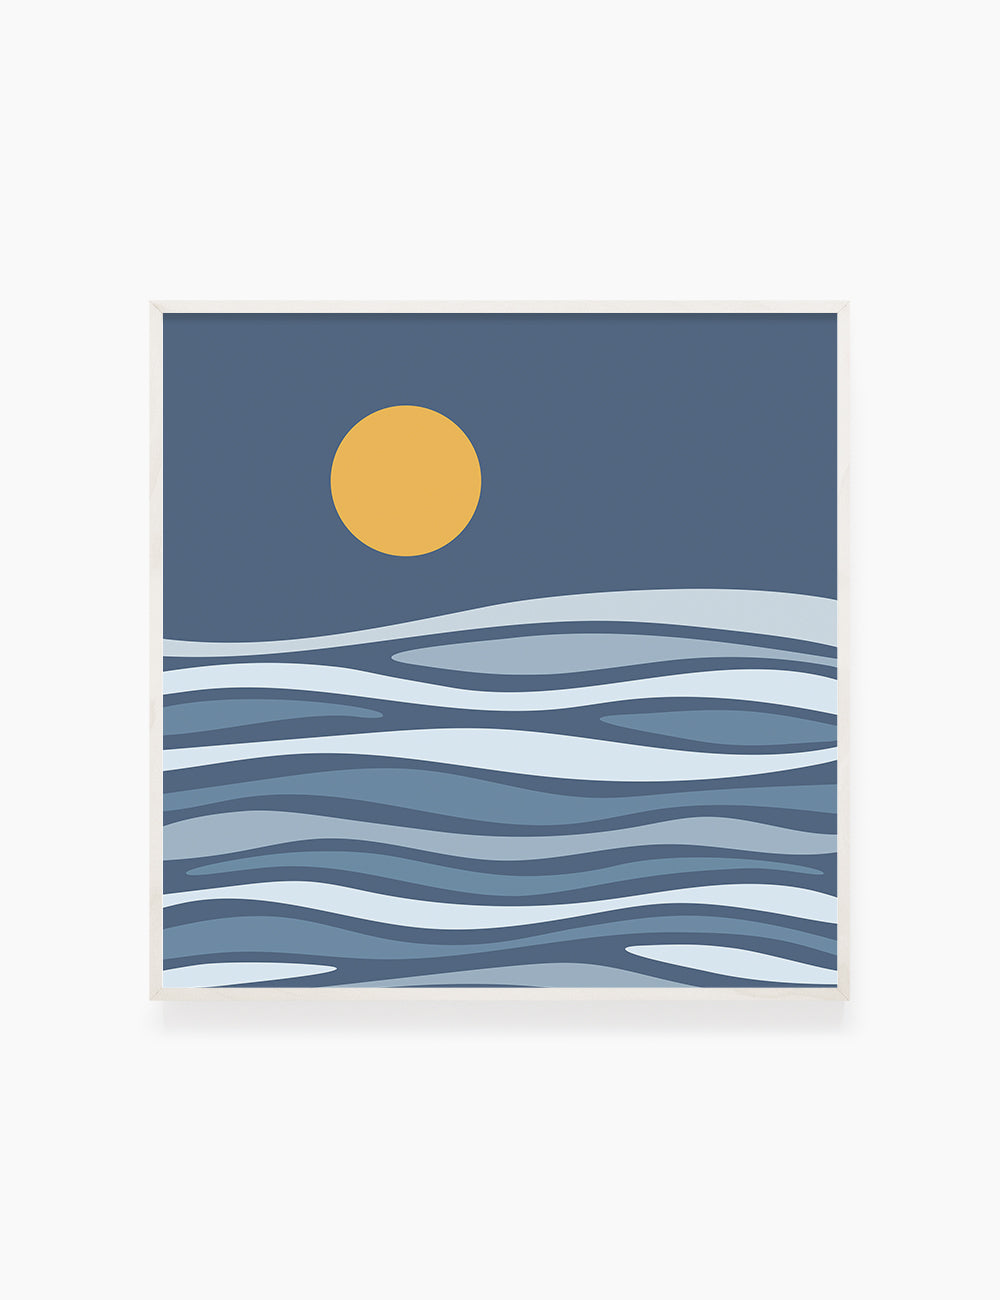 FULL MOON OVER THE BLUE OCEAN WAVES. BOHO ART. Minimalist. Abstract. Printable Wall Art Illustration. - PAPER MOON Art & Design